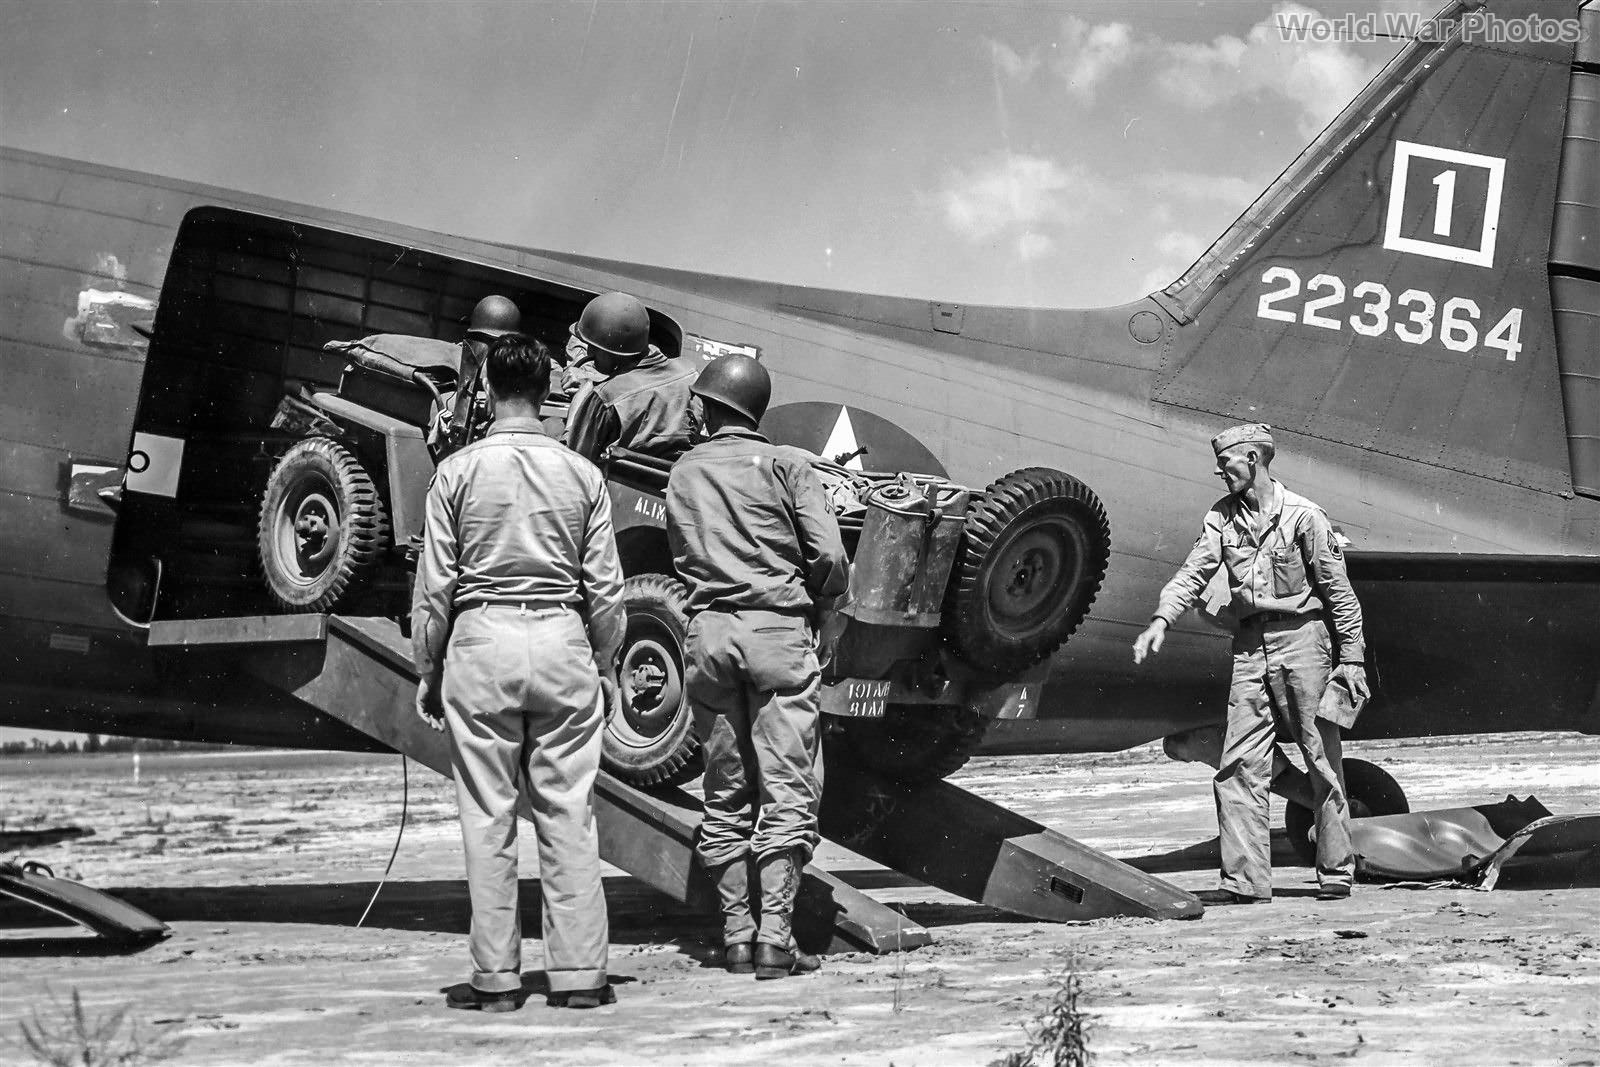 C-47 1943 Carolina maneuvers